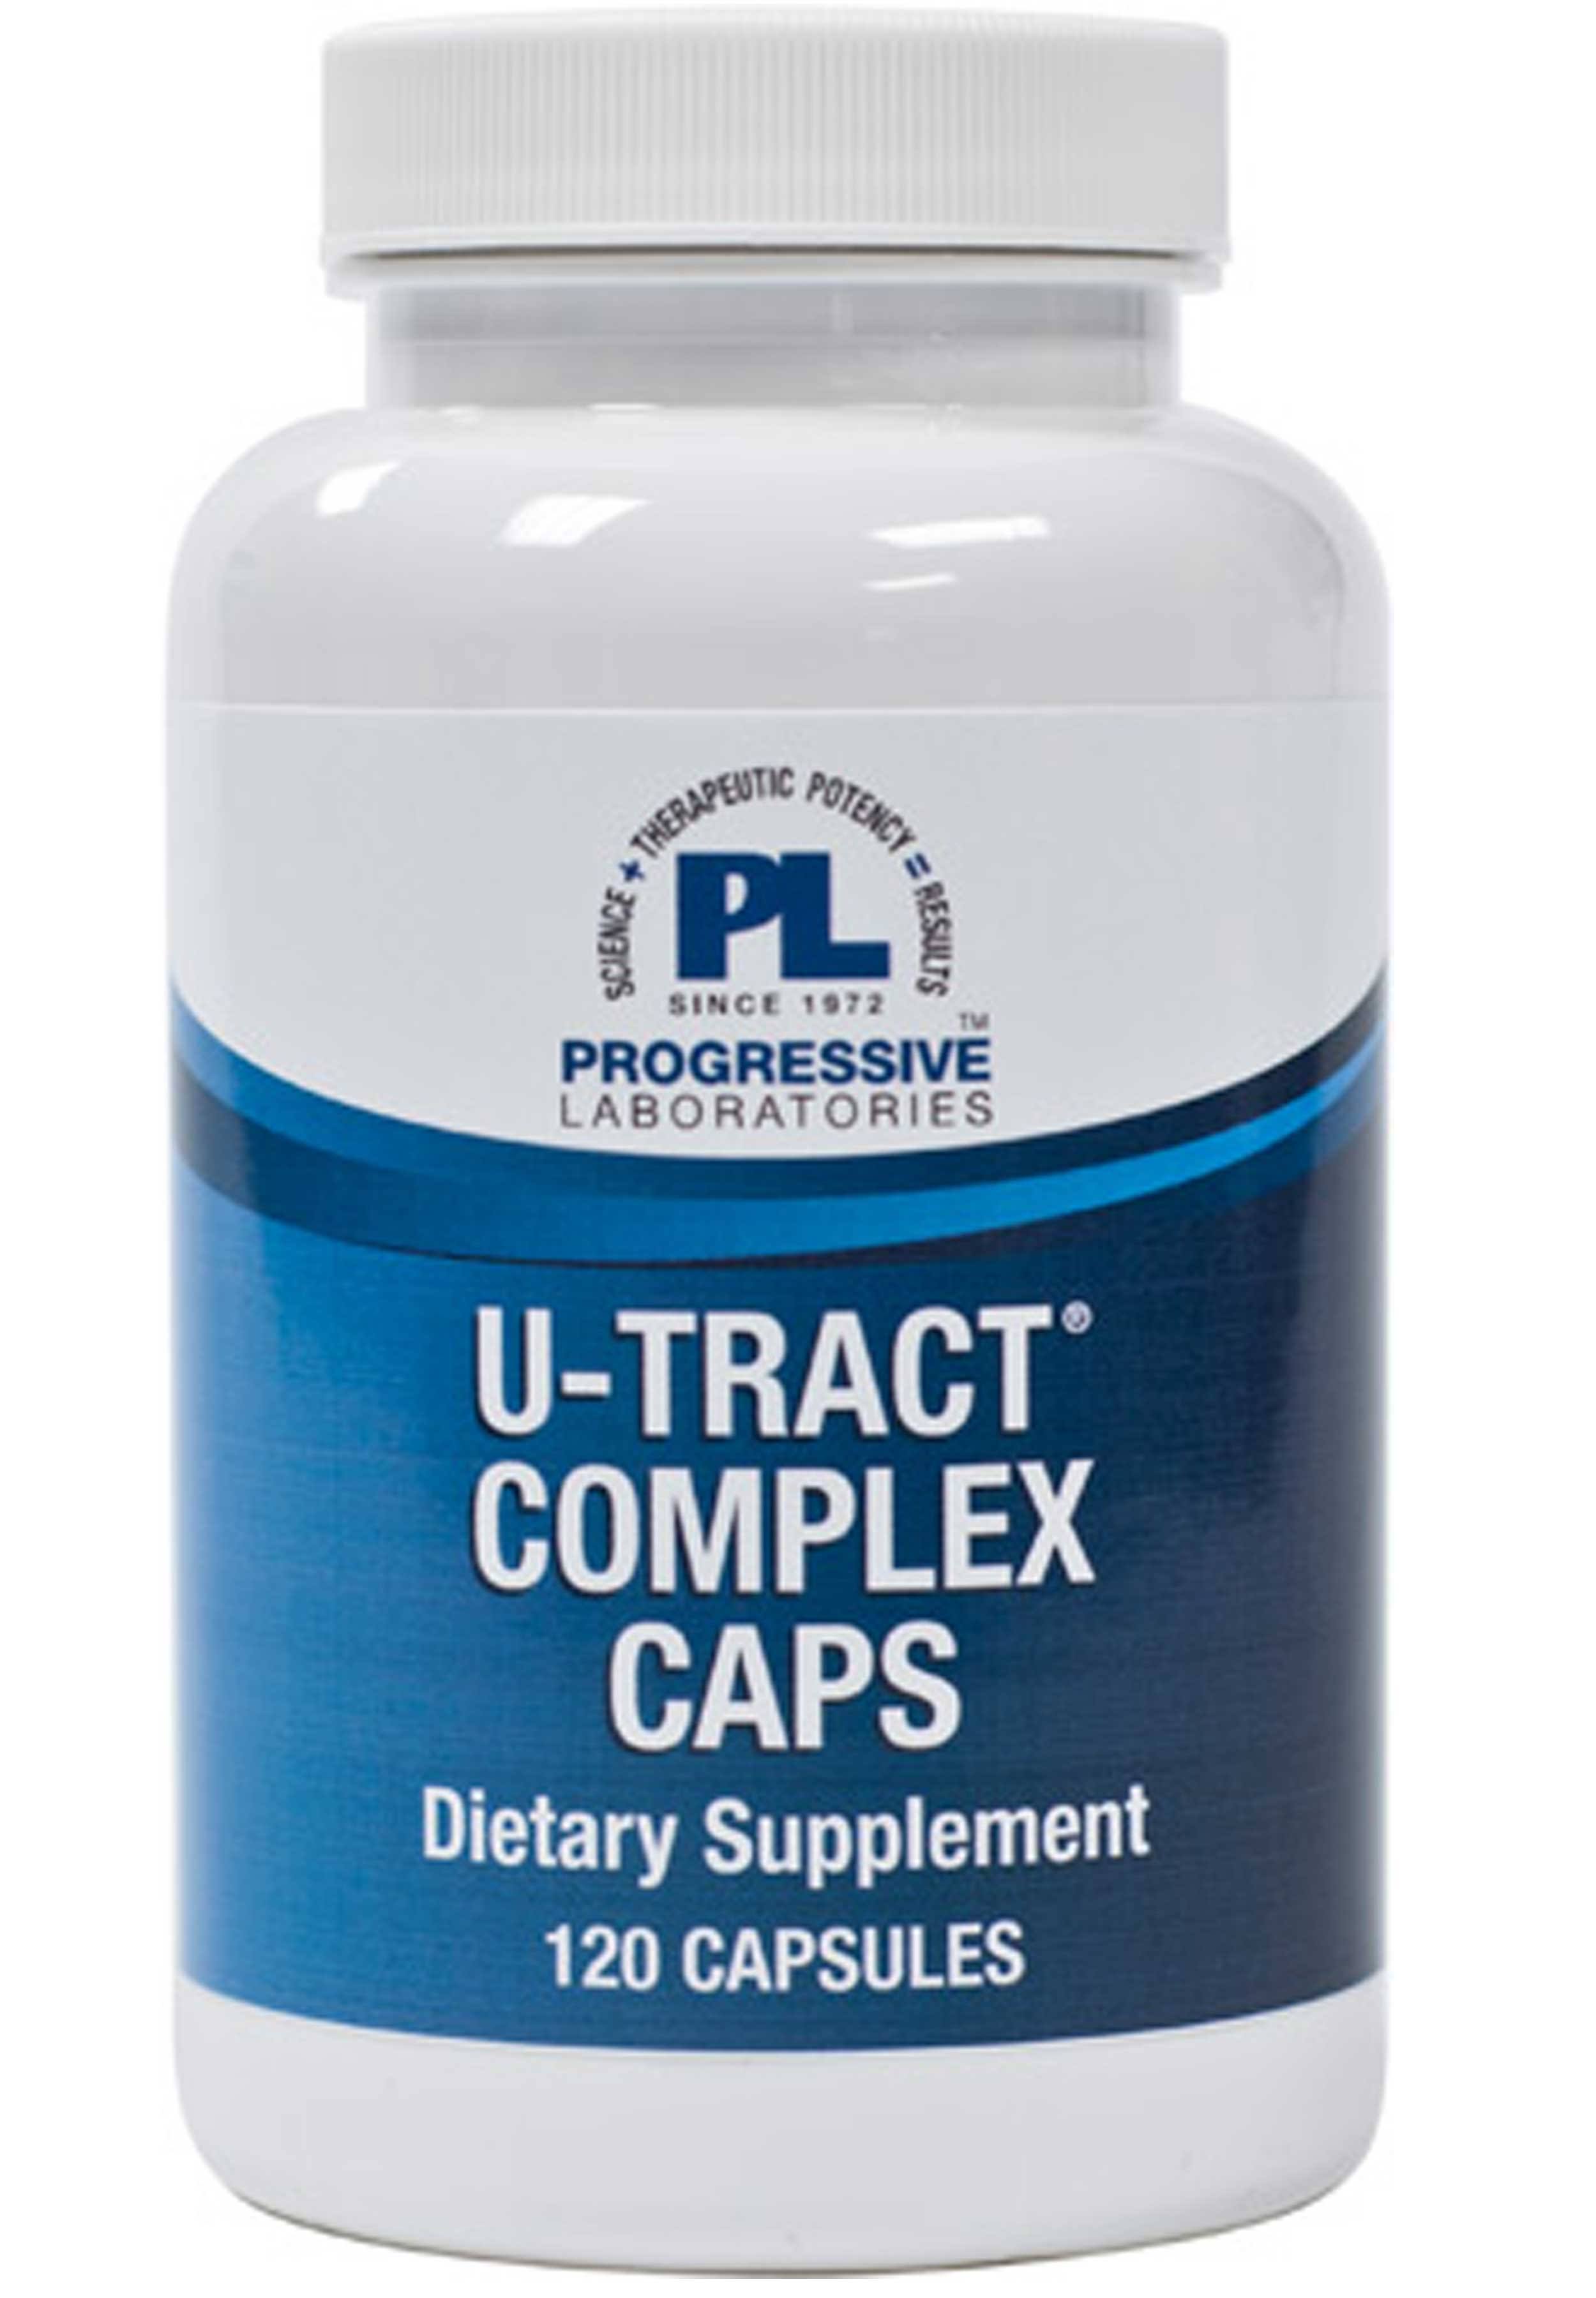 Progressive Labs U-Tract Complex Caps Dietary Supplement - x120